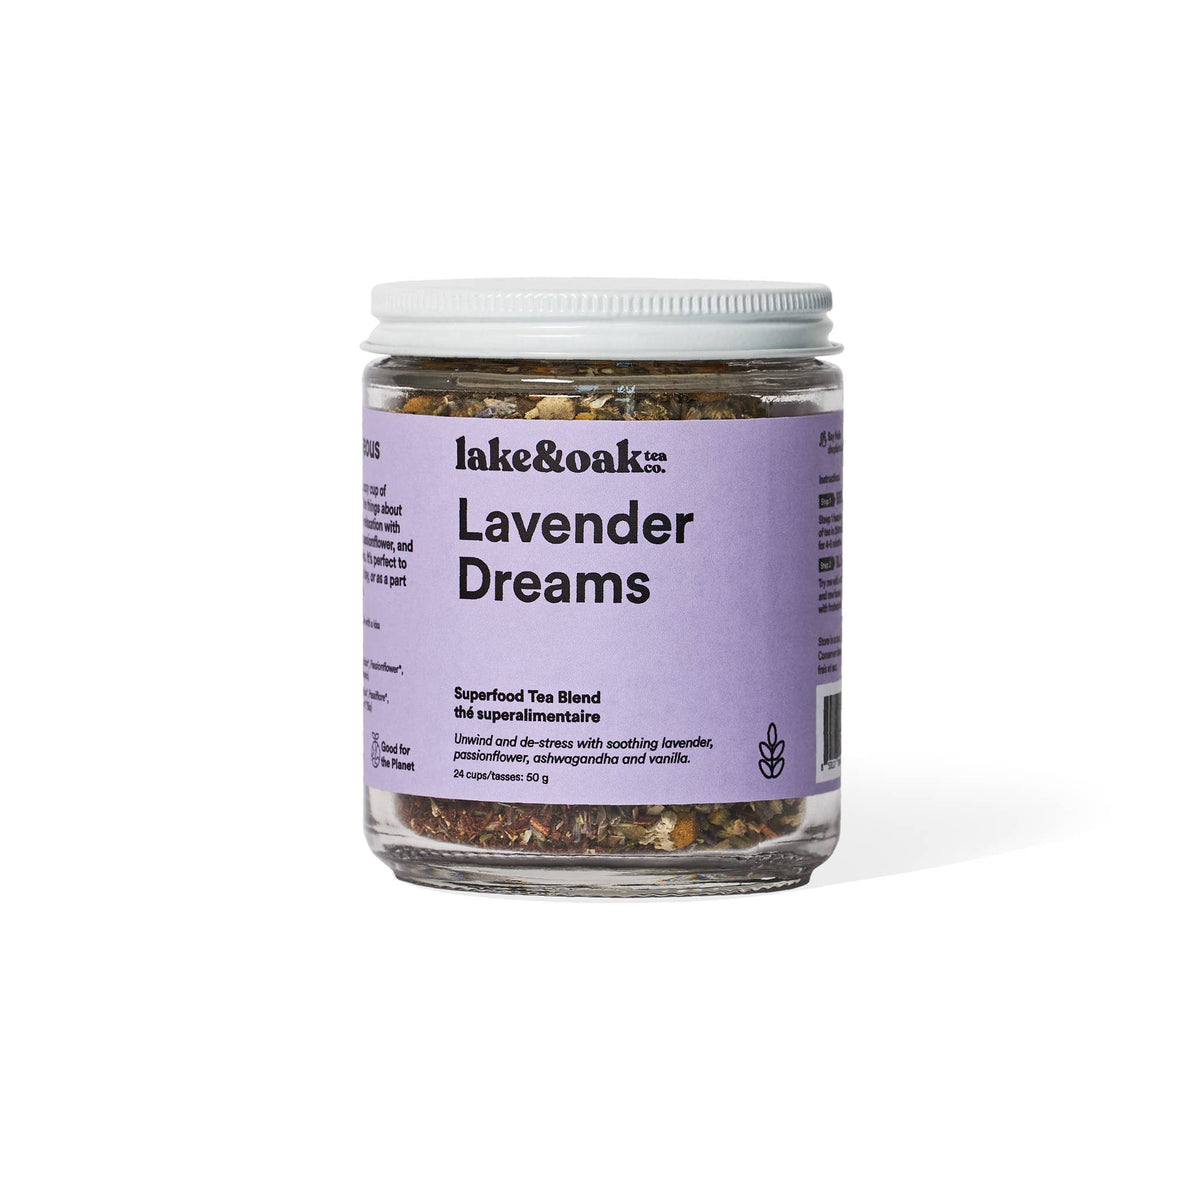 Lake & Oak Tea Co. - Lavender Dreams - Superfood Tea Blend: Retail Glass Jar